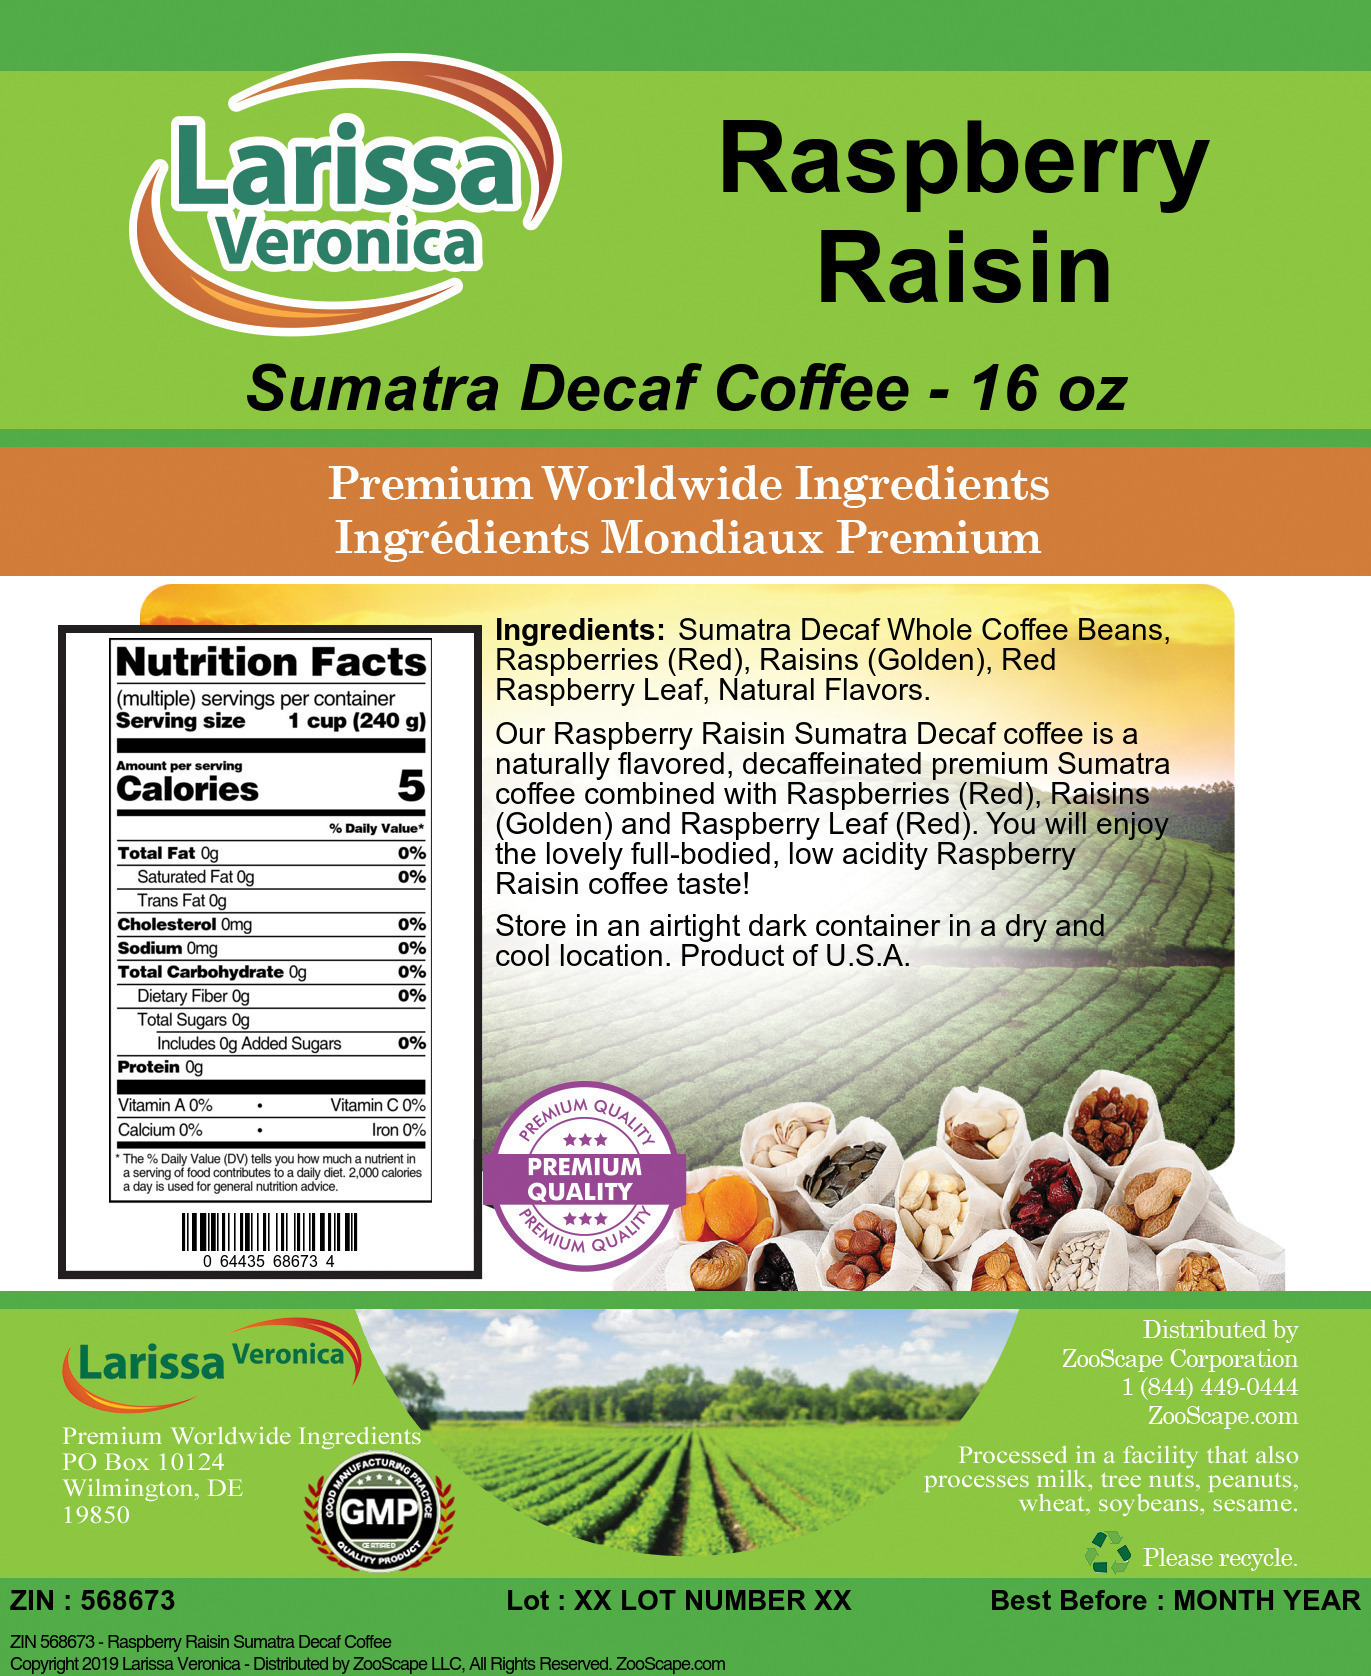 Raspberry Raisin Sumatra Decaf Coffee - Label